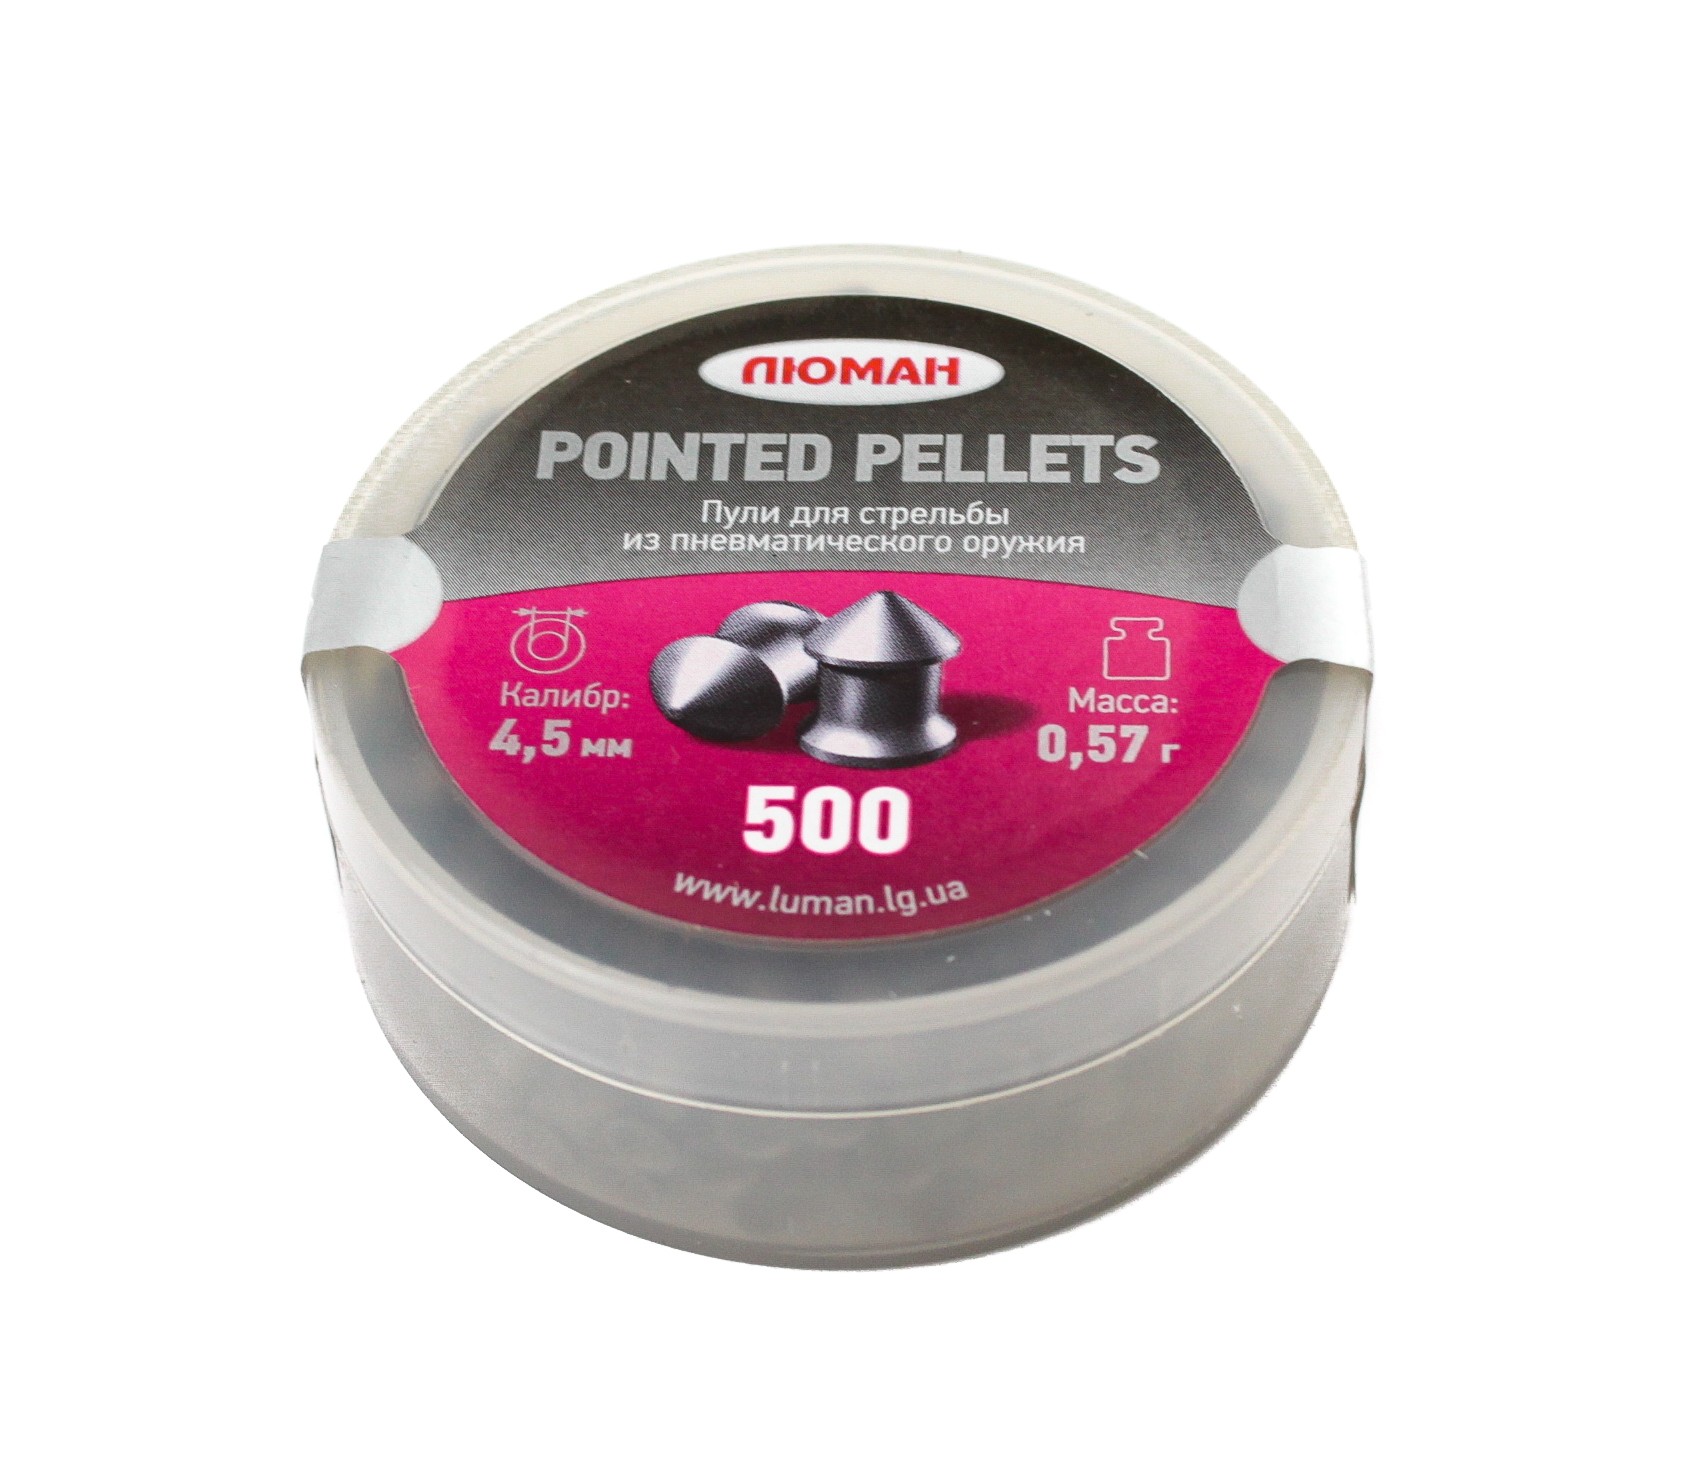 Пульки Люман Pointed pellets остроголовые 0,57 гр 4,5мм 500 шт - фото 1